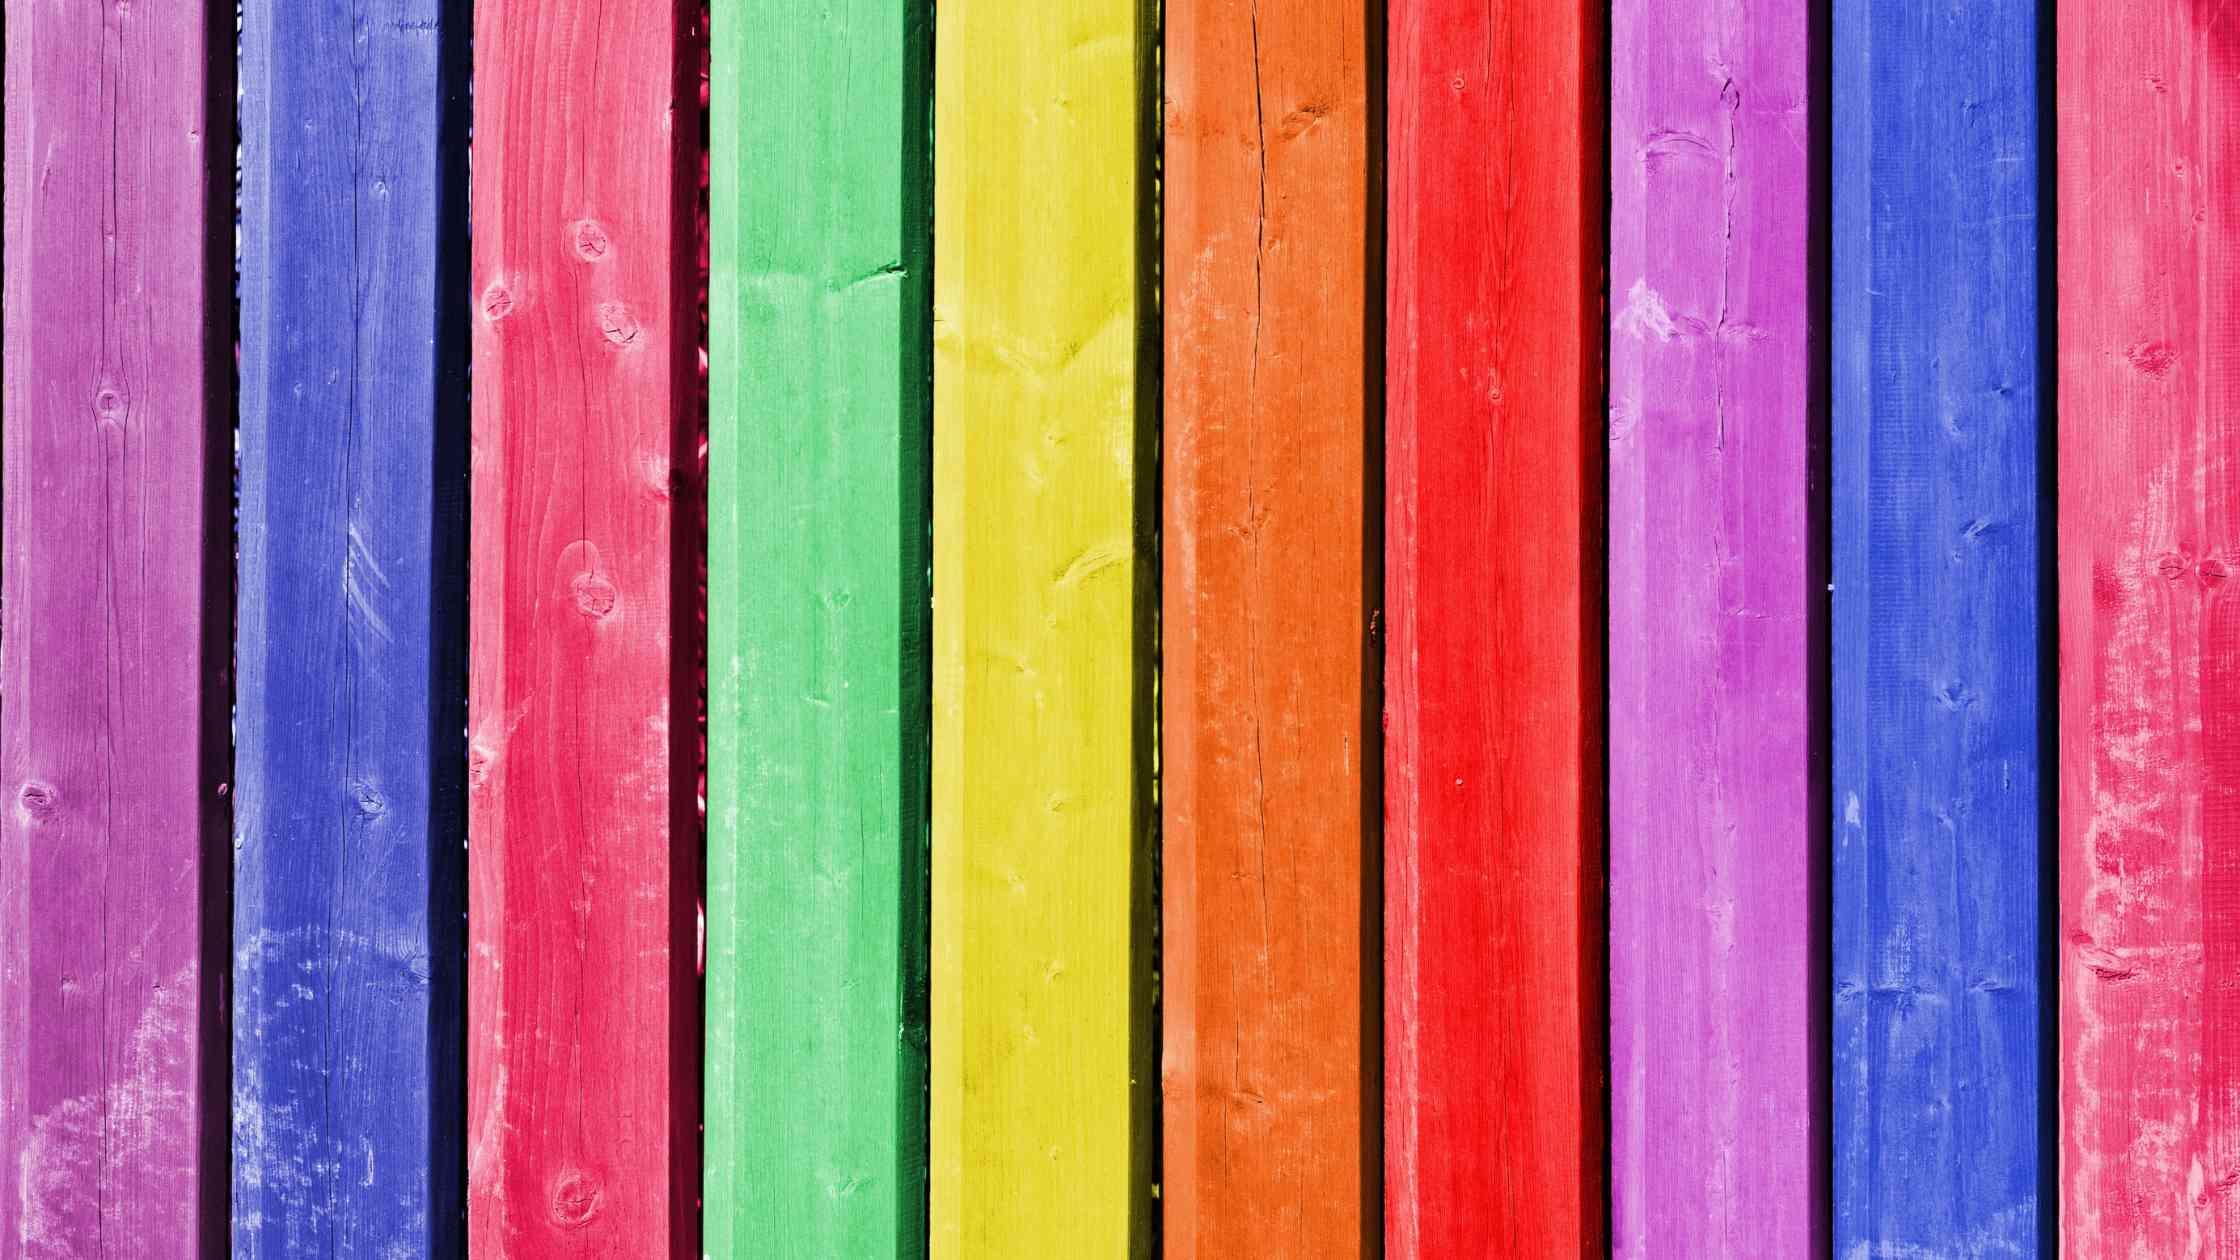 Доска цветная. Разноцветные доски. Разноцветный забор. Цветные деревянные доски. Цветные доски фон.